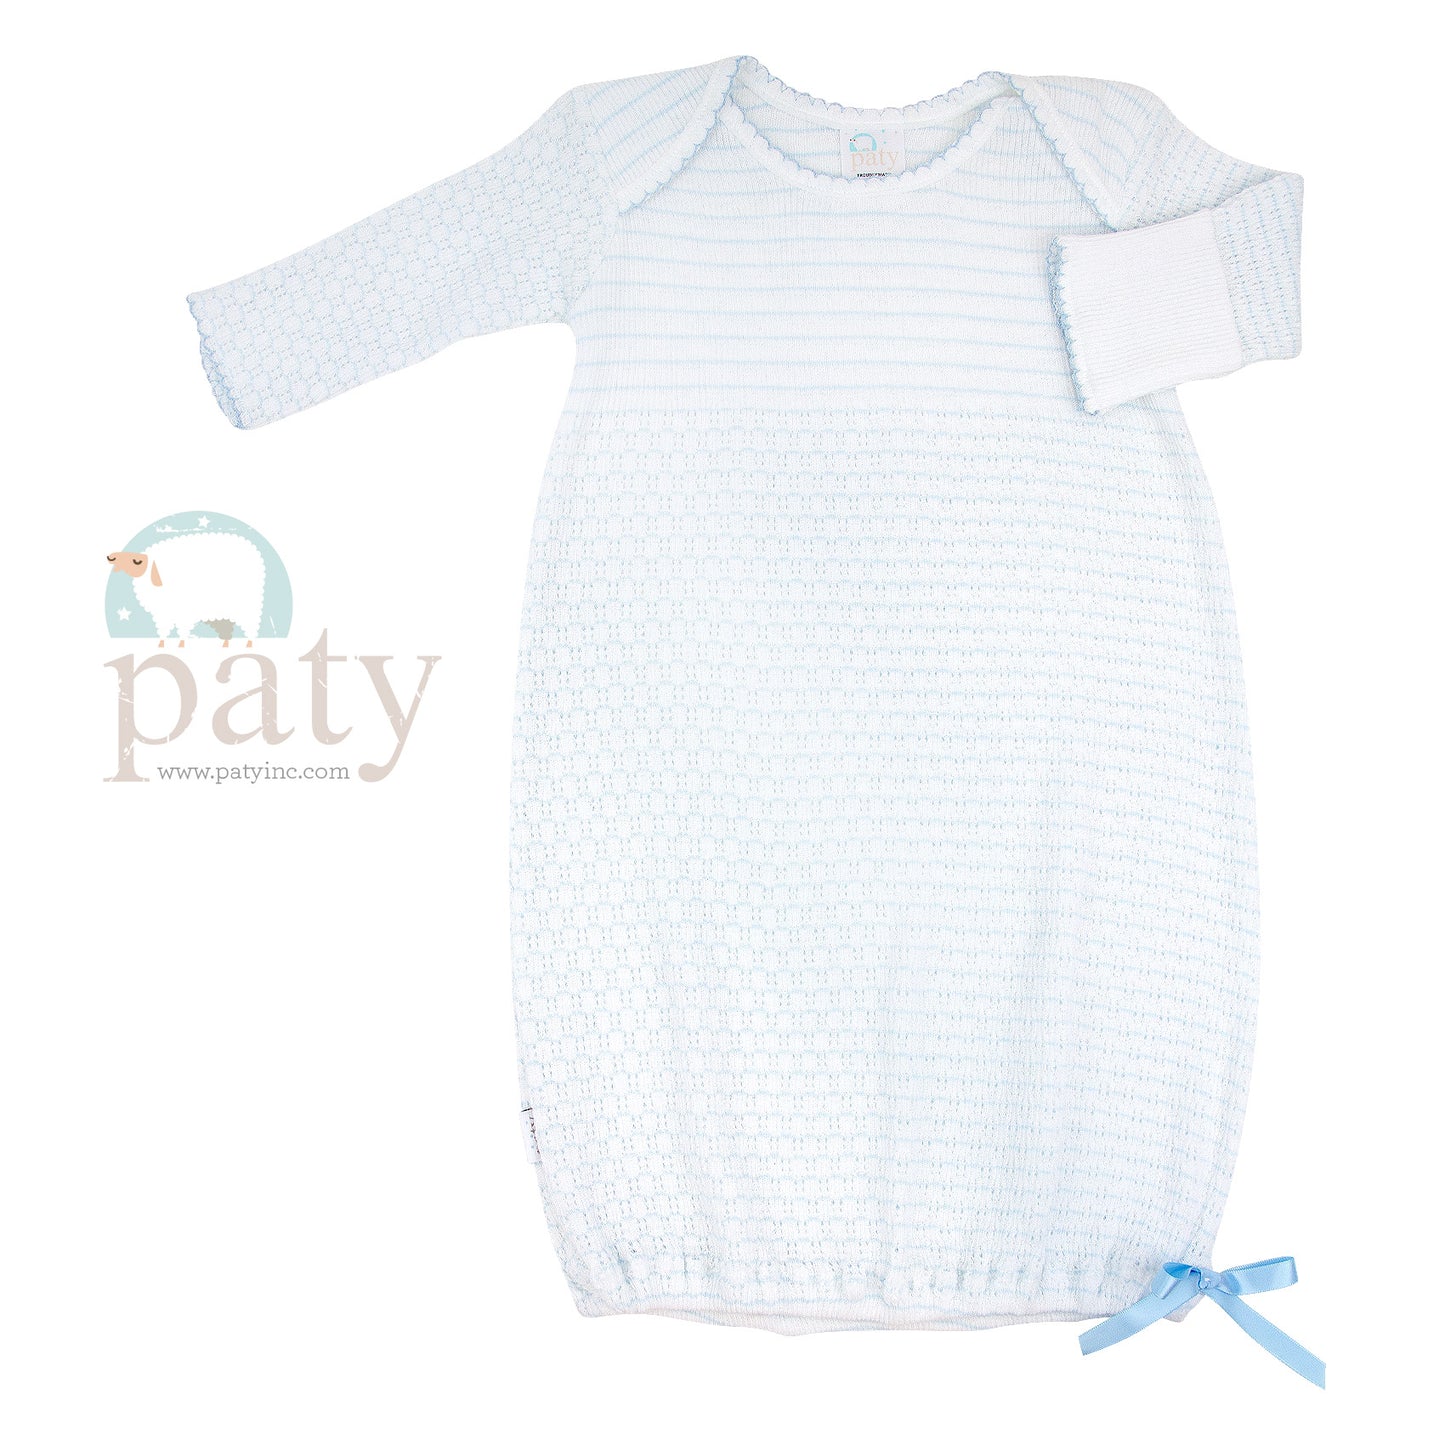 Pinstripe Paty Knit LS Lap Shoulder Gown #315